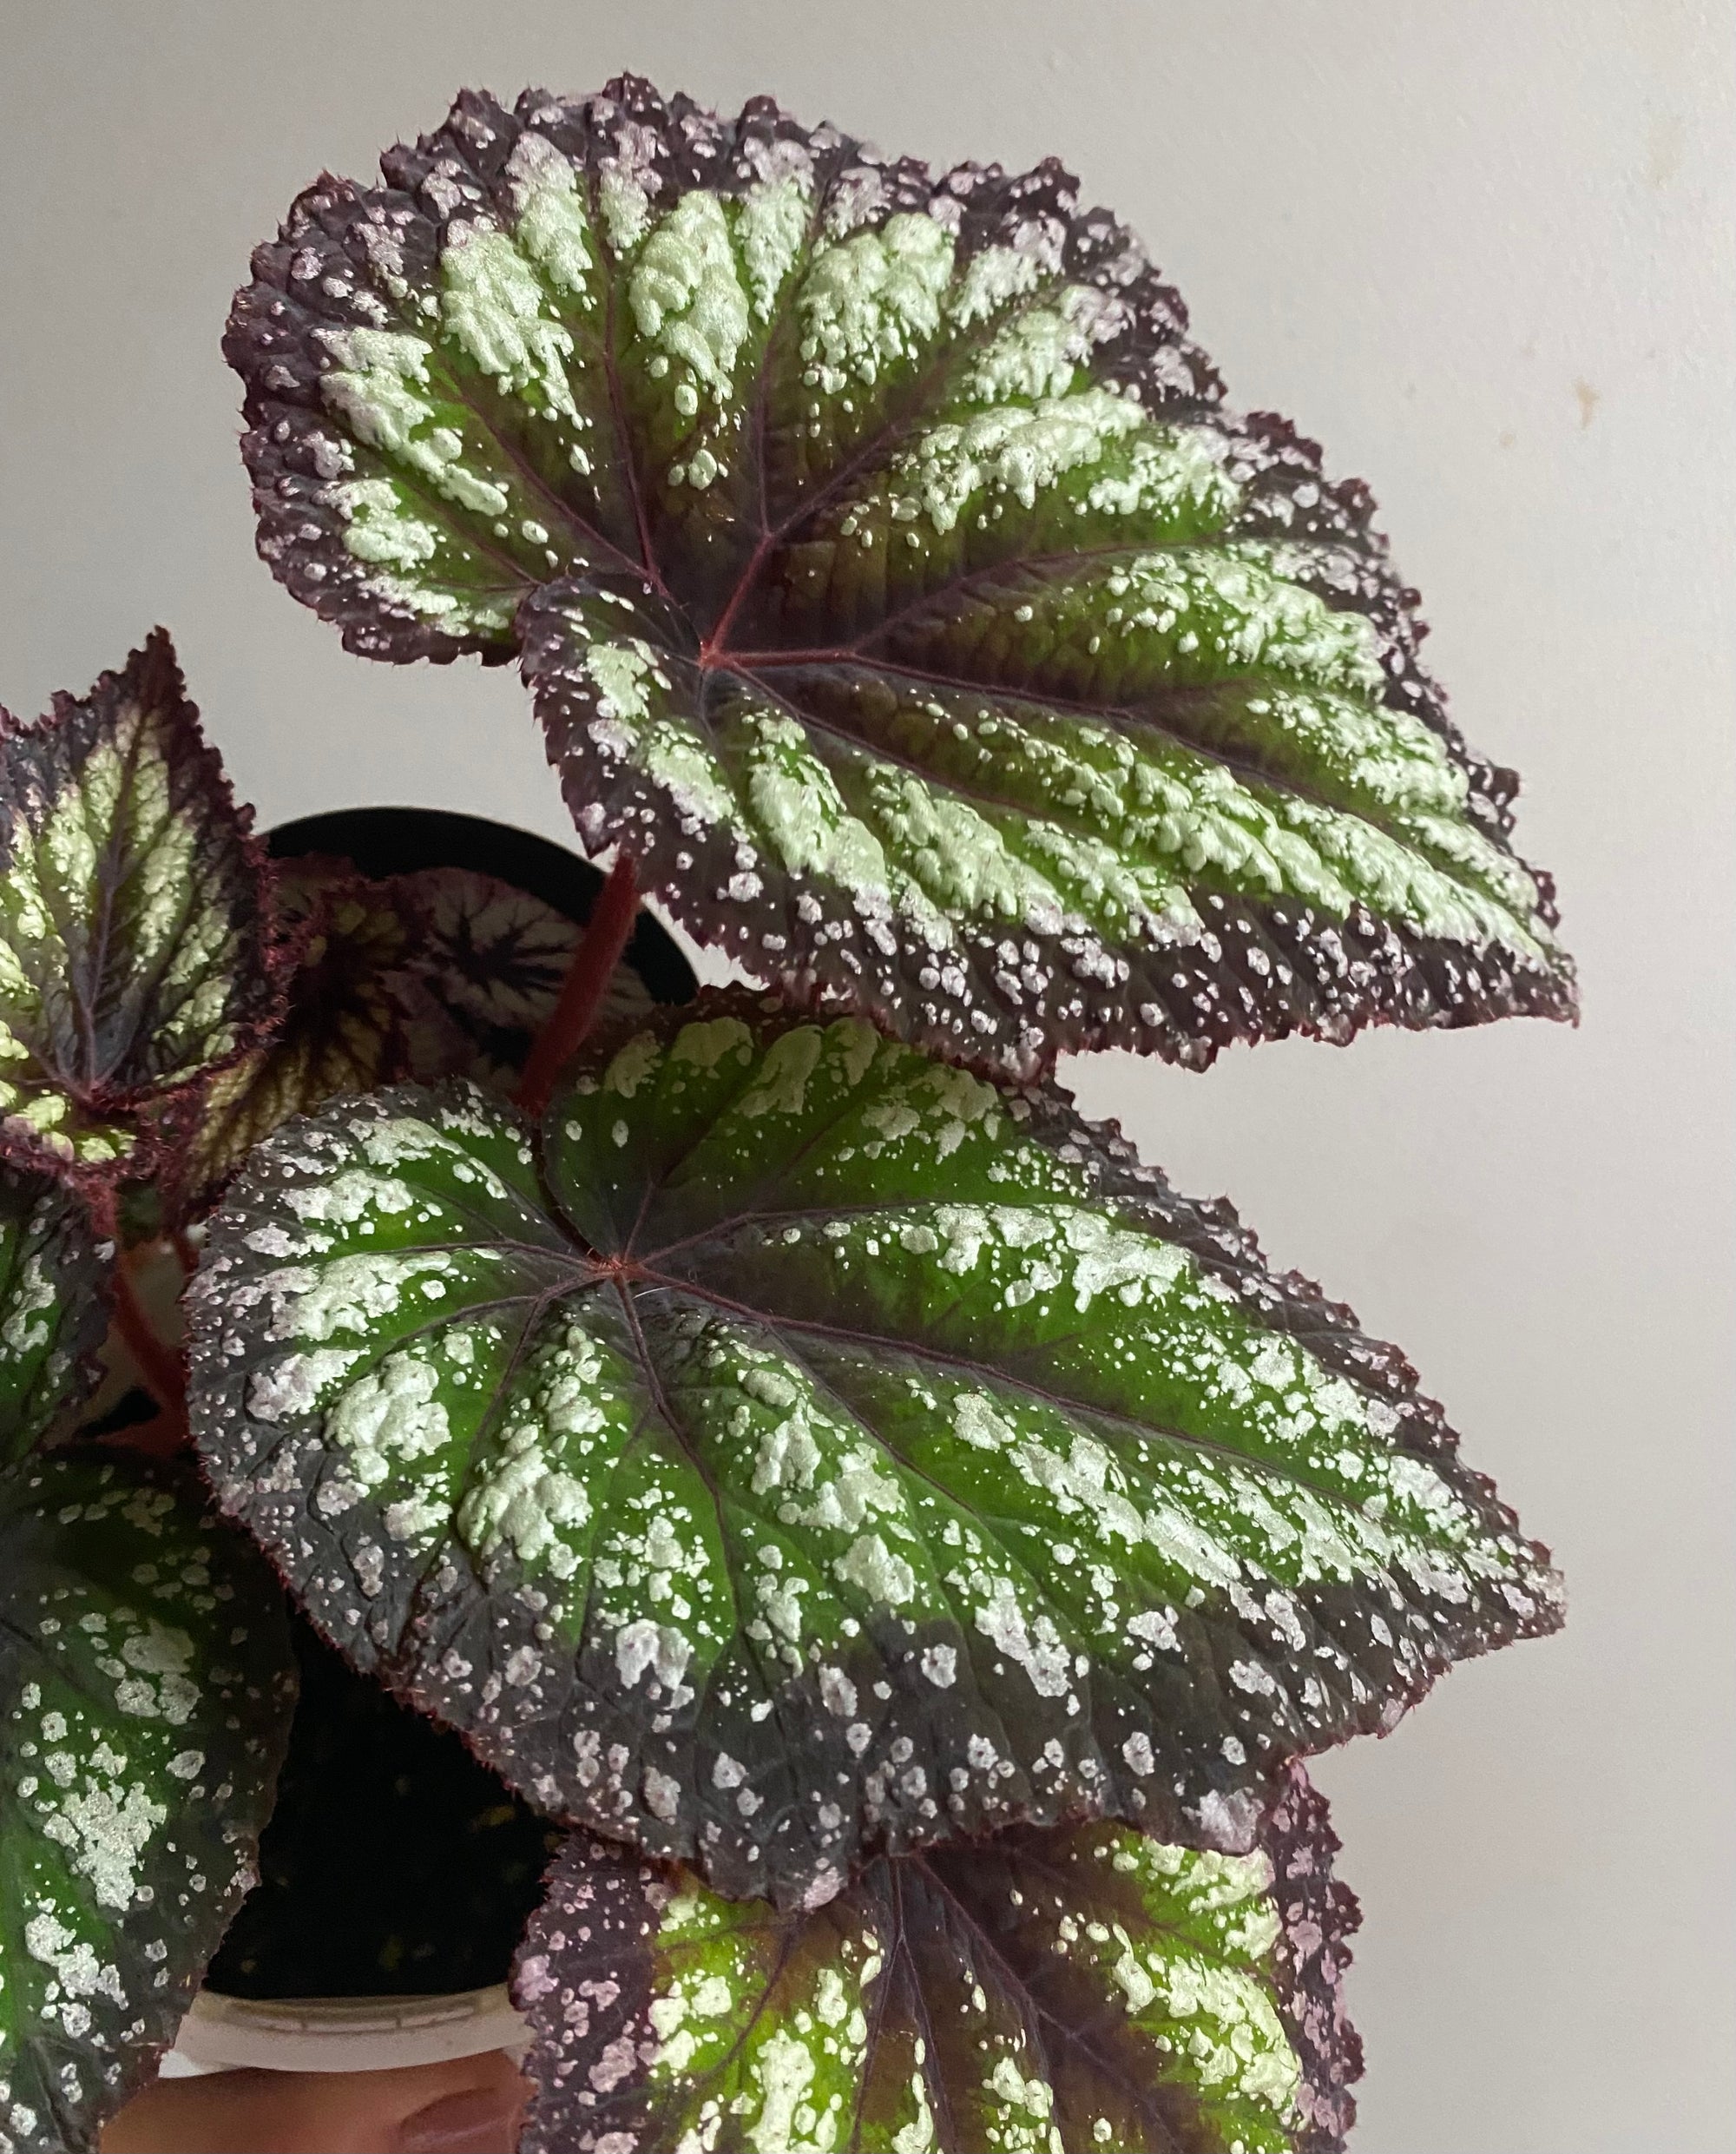 Begonia rex hybrid - green/silver/purple (NOID)